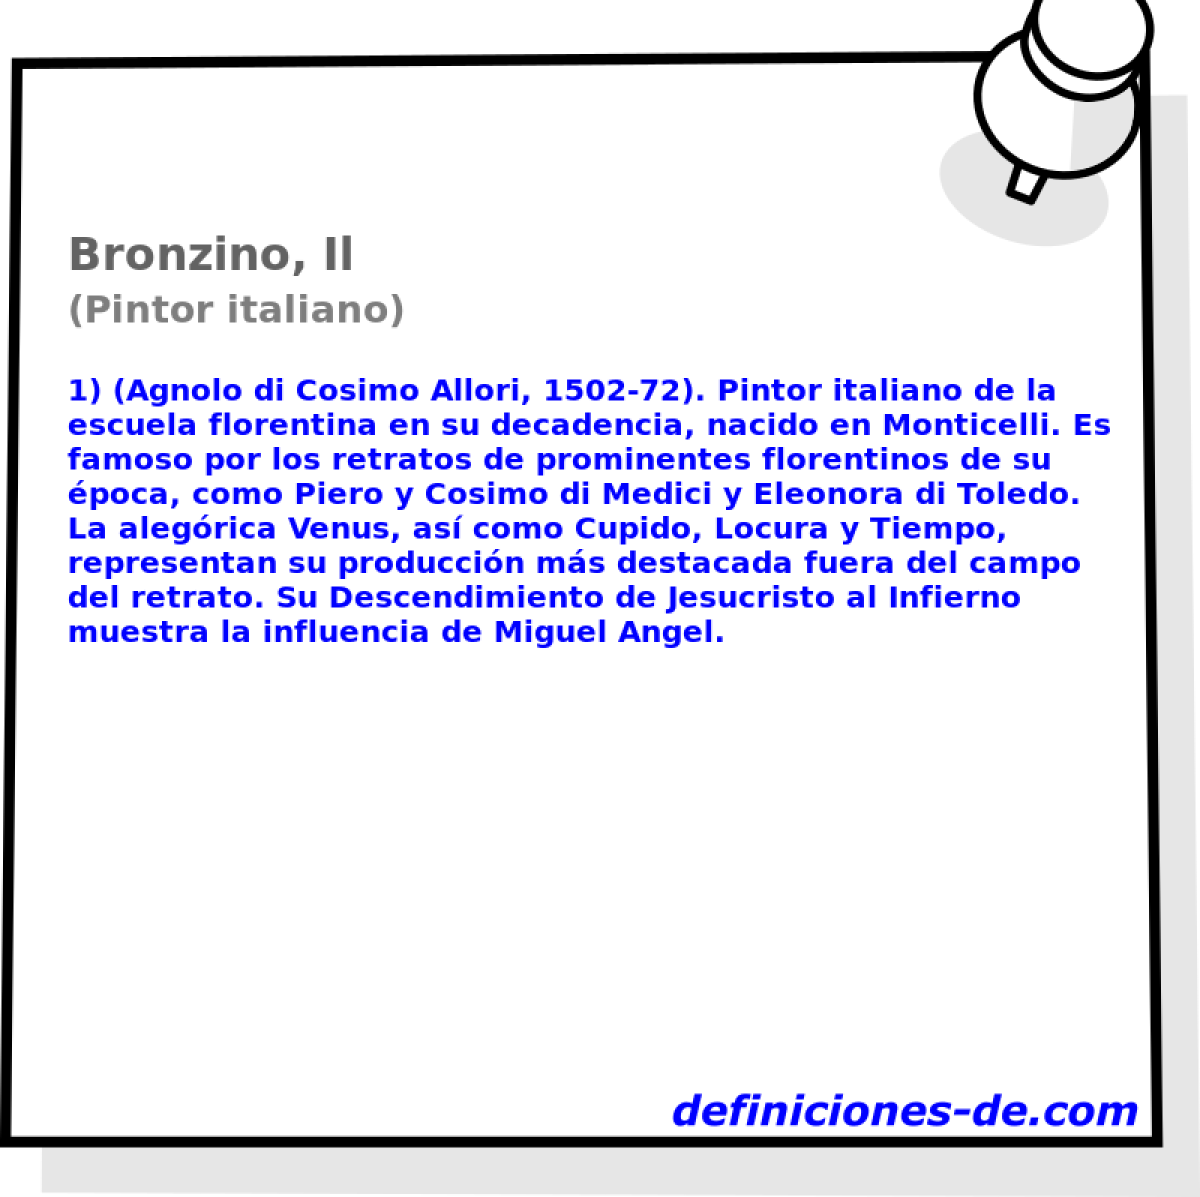 Bronzino, Il (Pintor italiano)